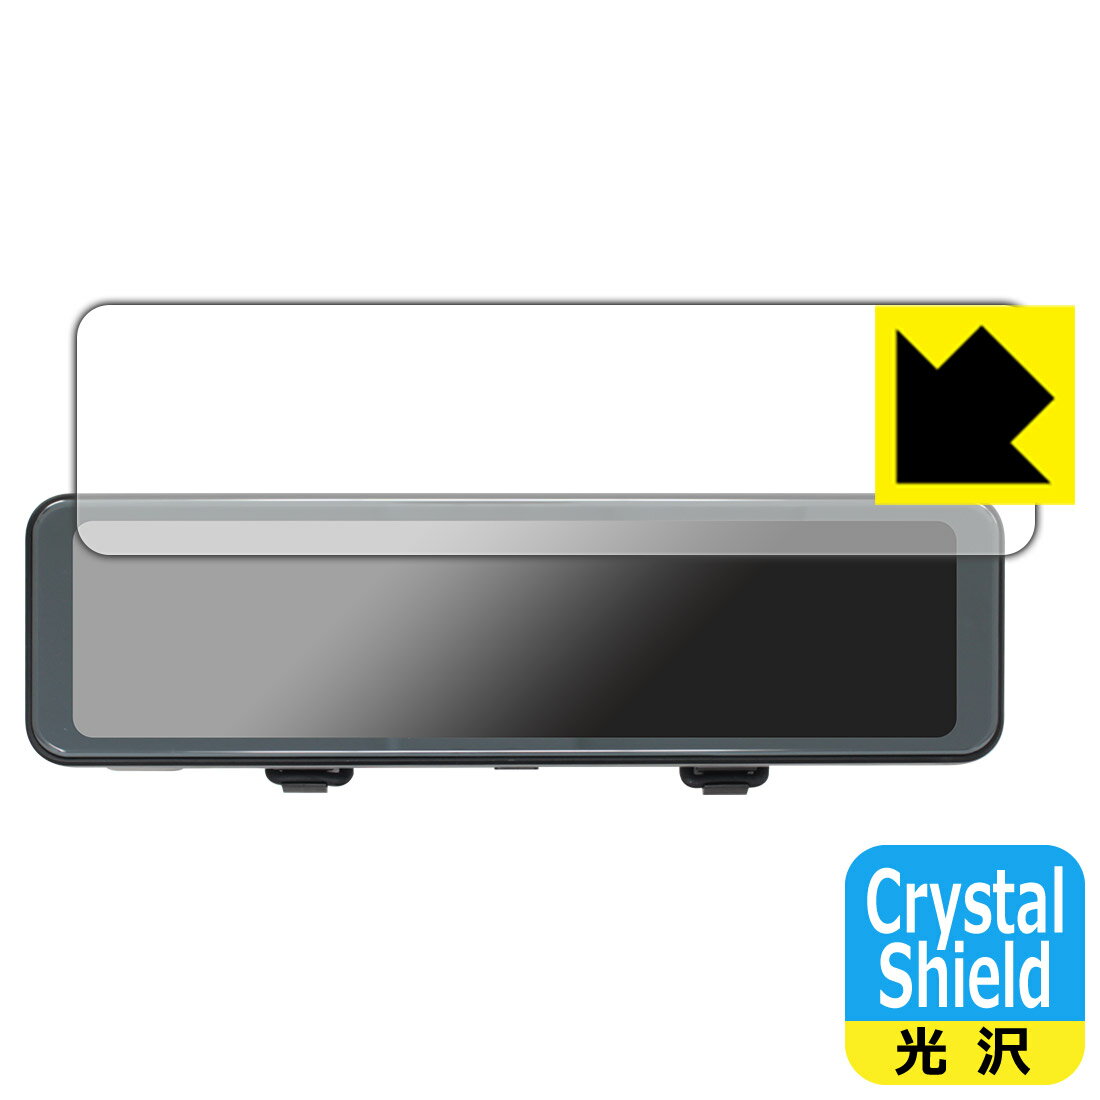 Crystal Shield【光沢】保護フィルム BAL 前後録画ドライブレコーダーミラー BALUCE II (バルーチェ II) No.5700 日本製 自社製造直販